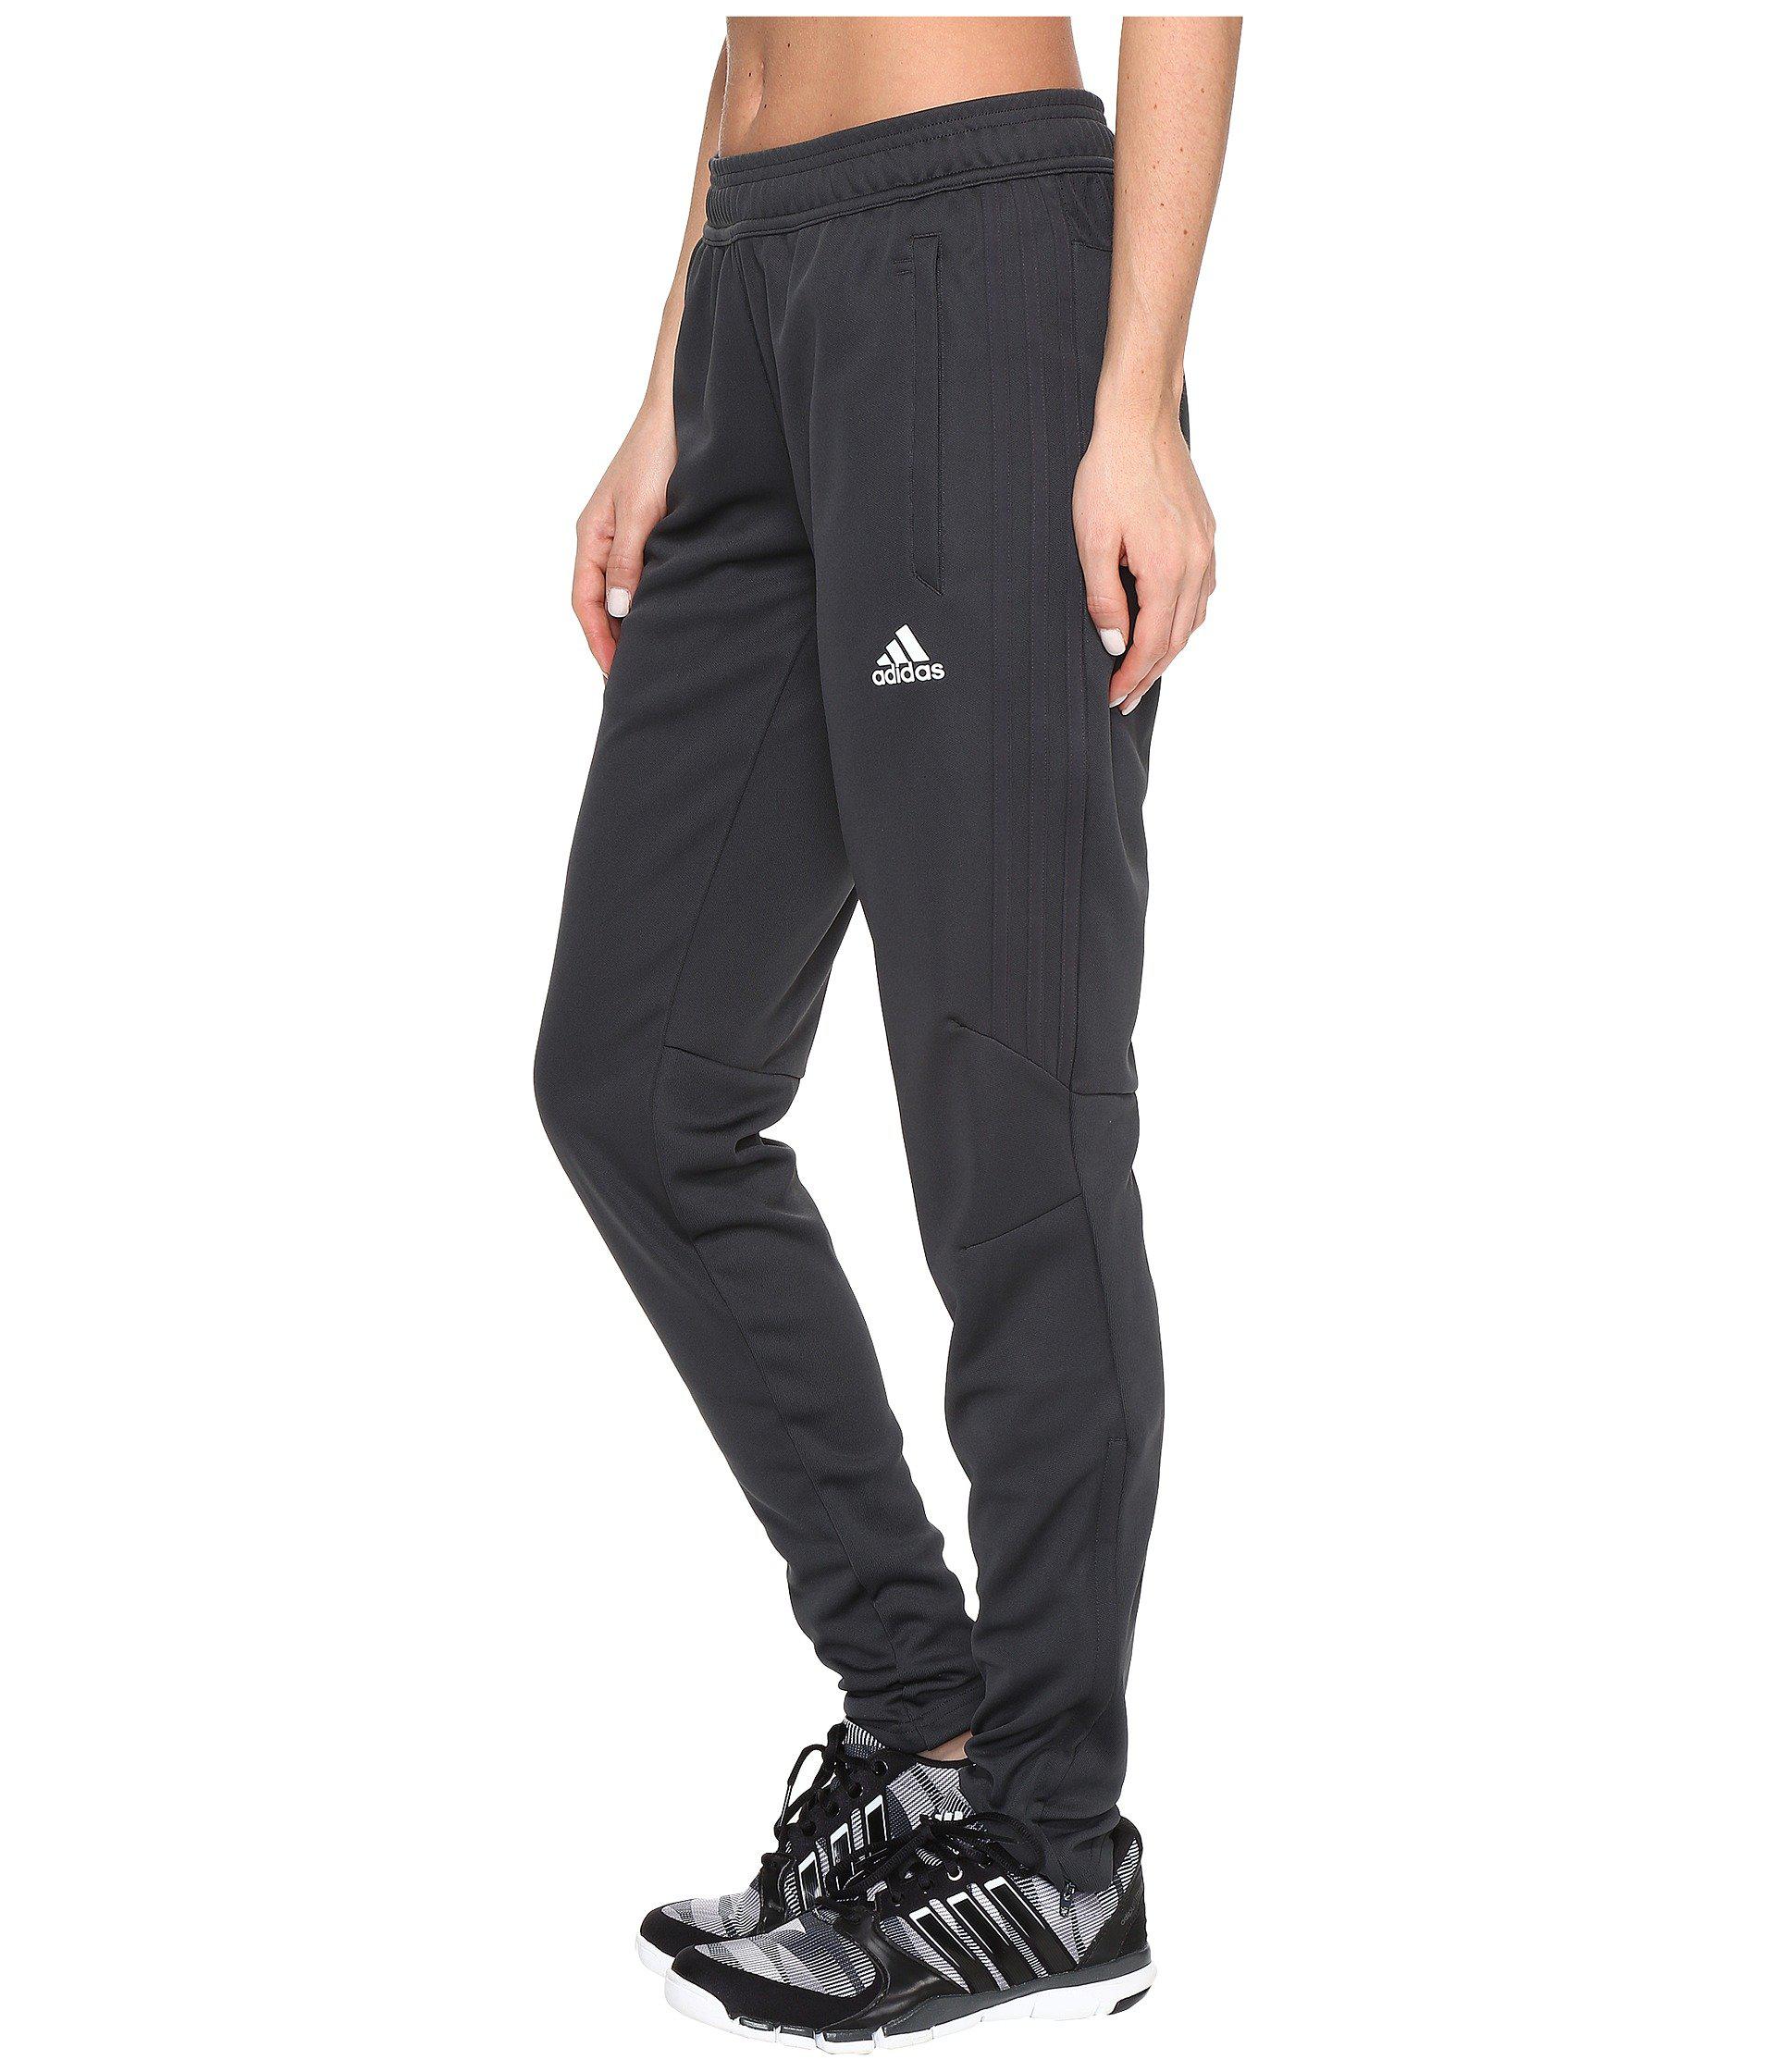 Adidas Synthetic Tiro 17 Pants Black Silver Reflective Women S